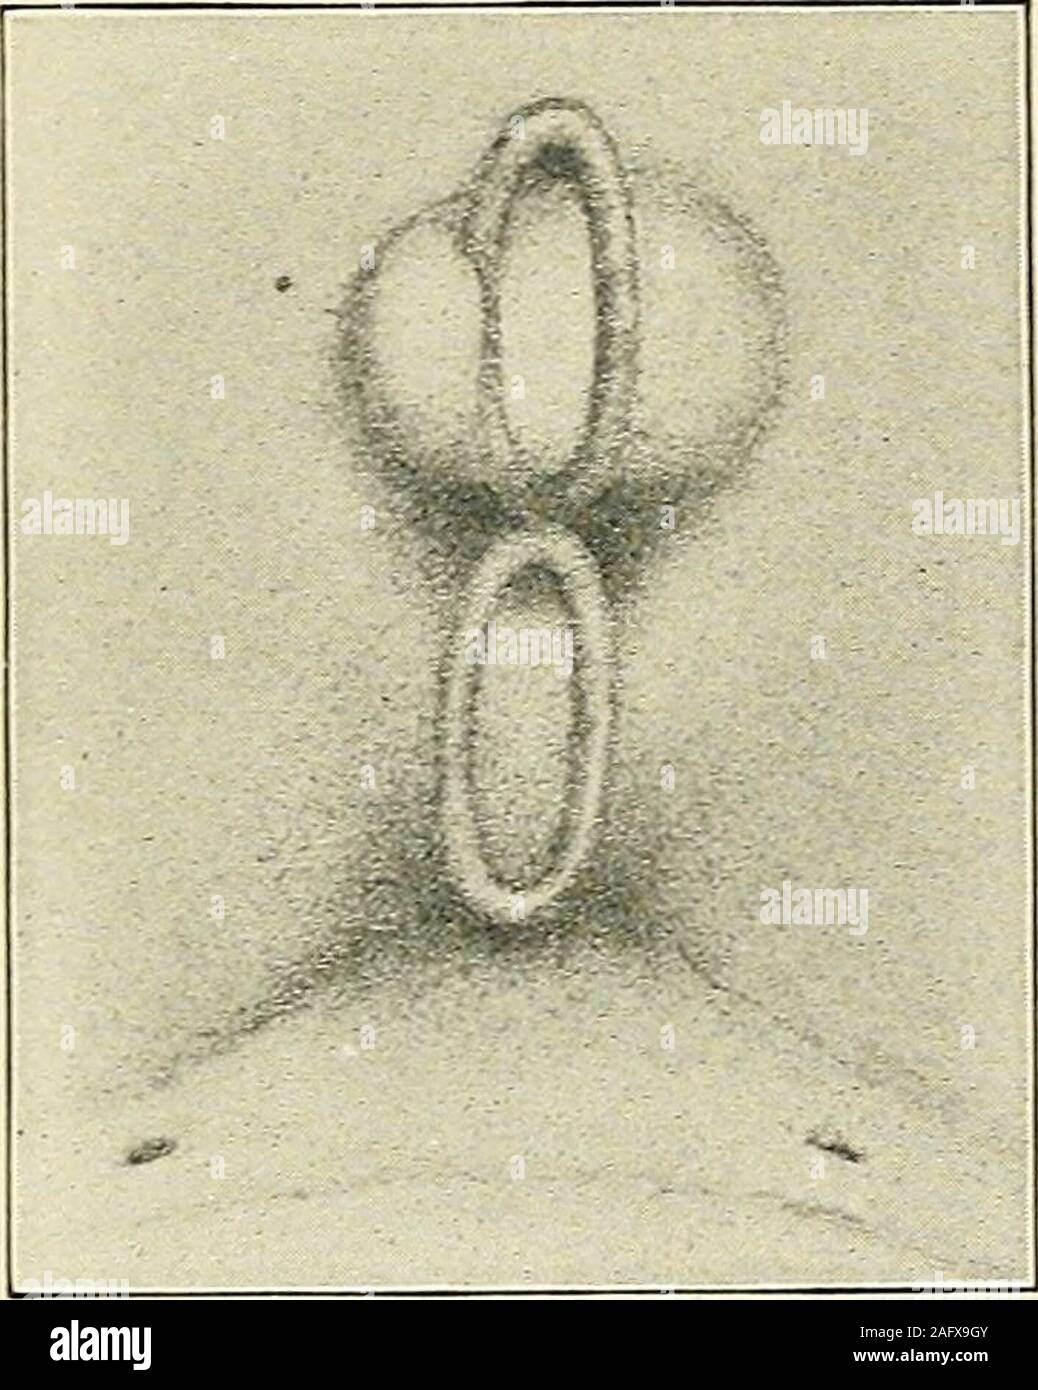 Prostate hypertrophy fotografías e imágenes de alta resolución - Página 2 -  Alamy